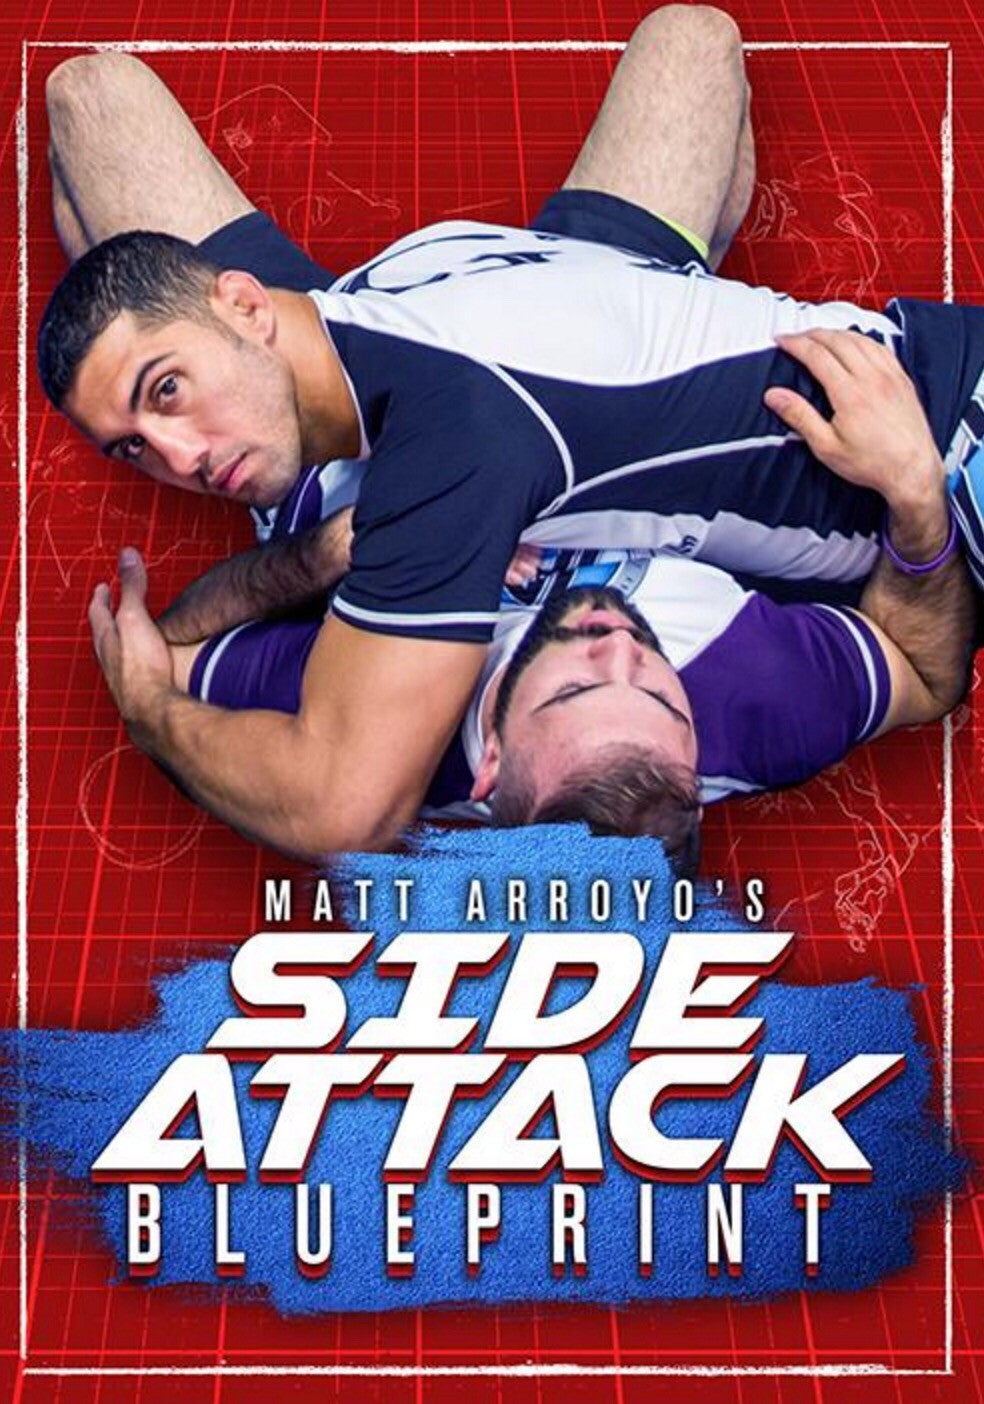 Side Attack Blueprint 3 DVD Set with Matt Arroyo - Budovideos Inc